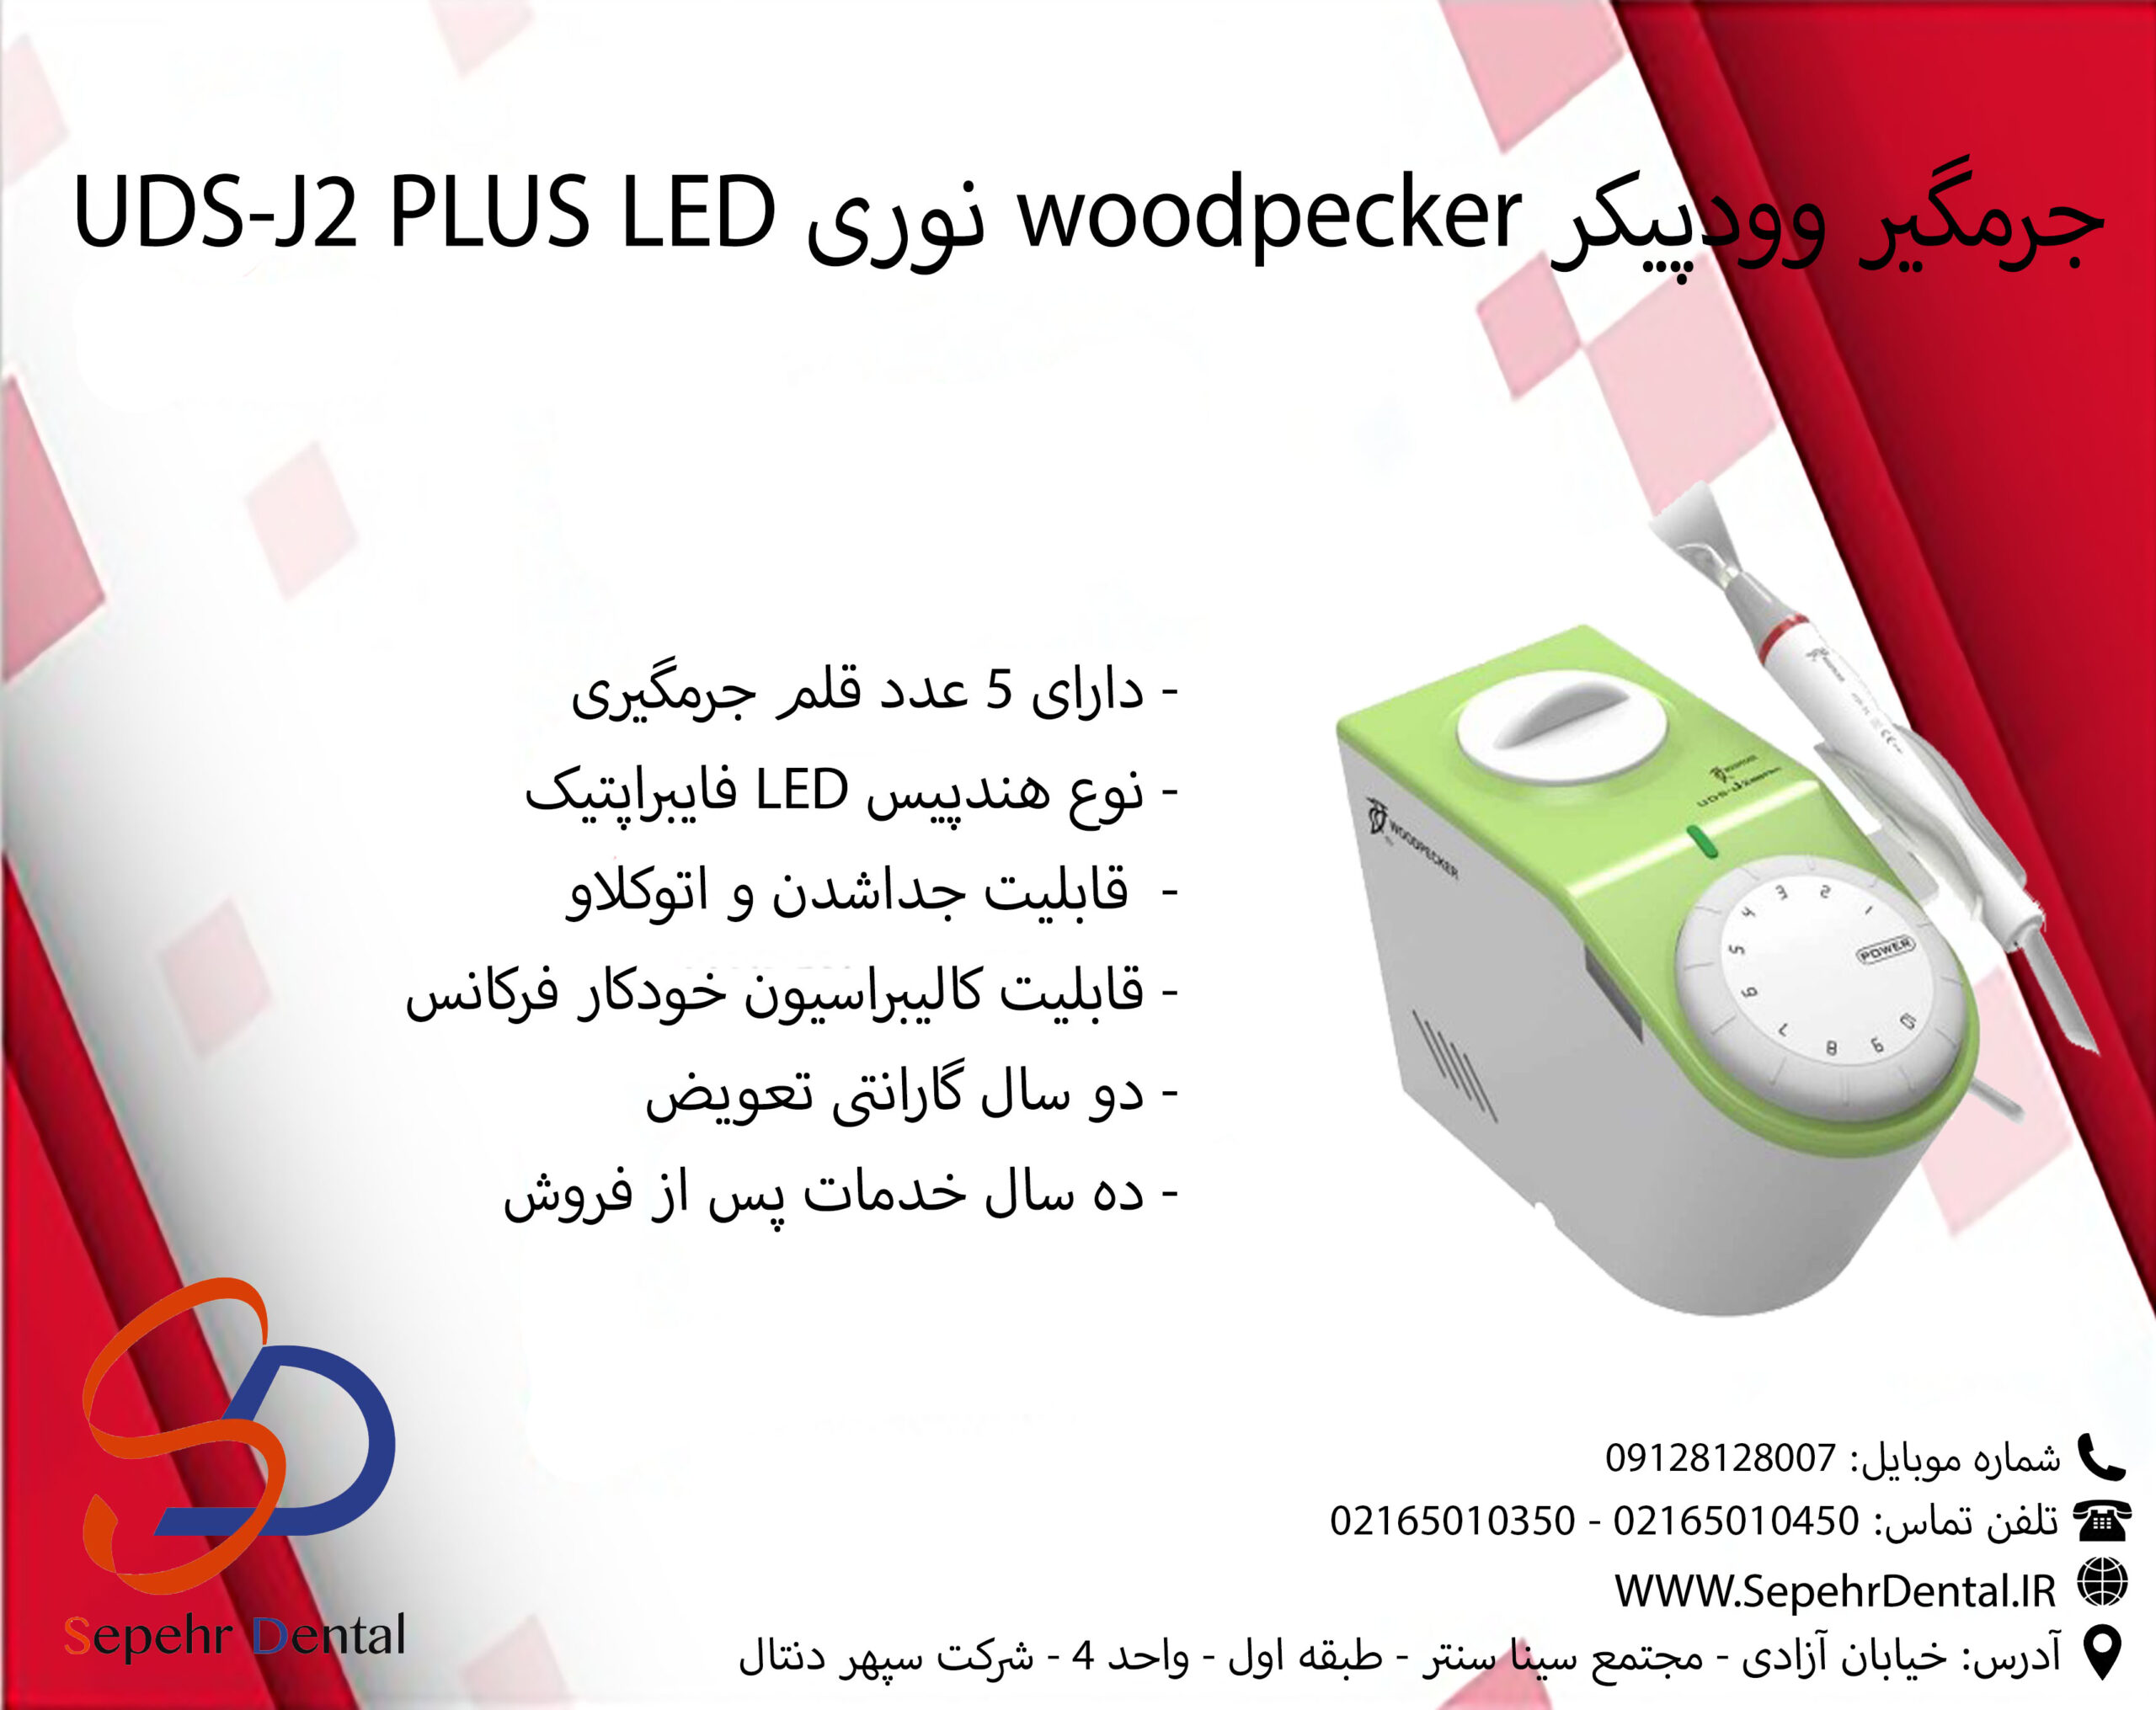 جرمگیر وودپیکر woodpecker نوری UDS-J2 PLUS LED